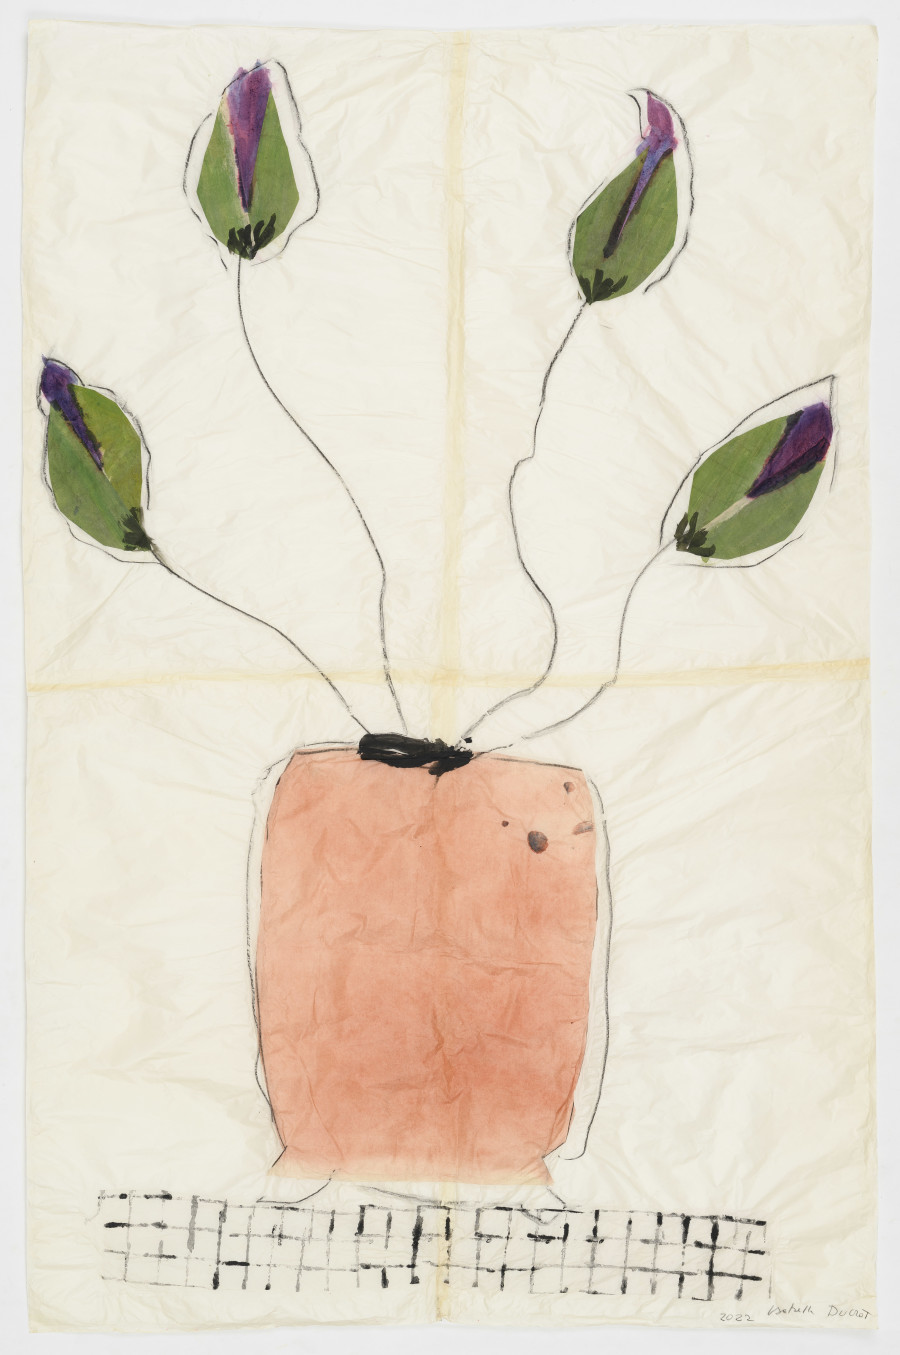 Isabella Ducrot, Big Pot III, 2022, Pencil, collages, pigment, textile on Japan paper, 190 x 126 cm. Photo credit: Giorgio Benni